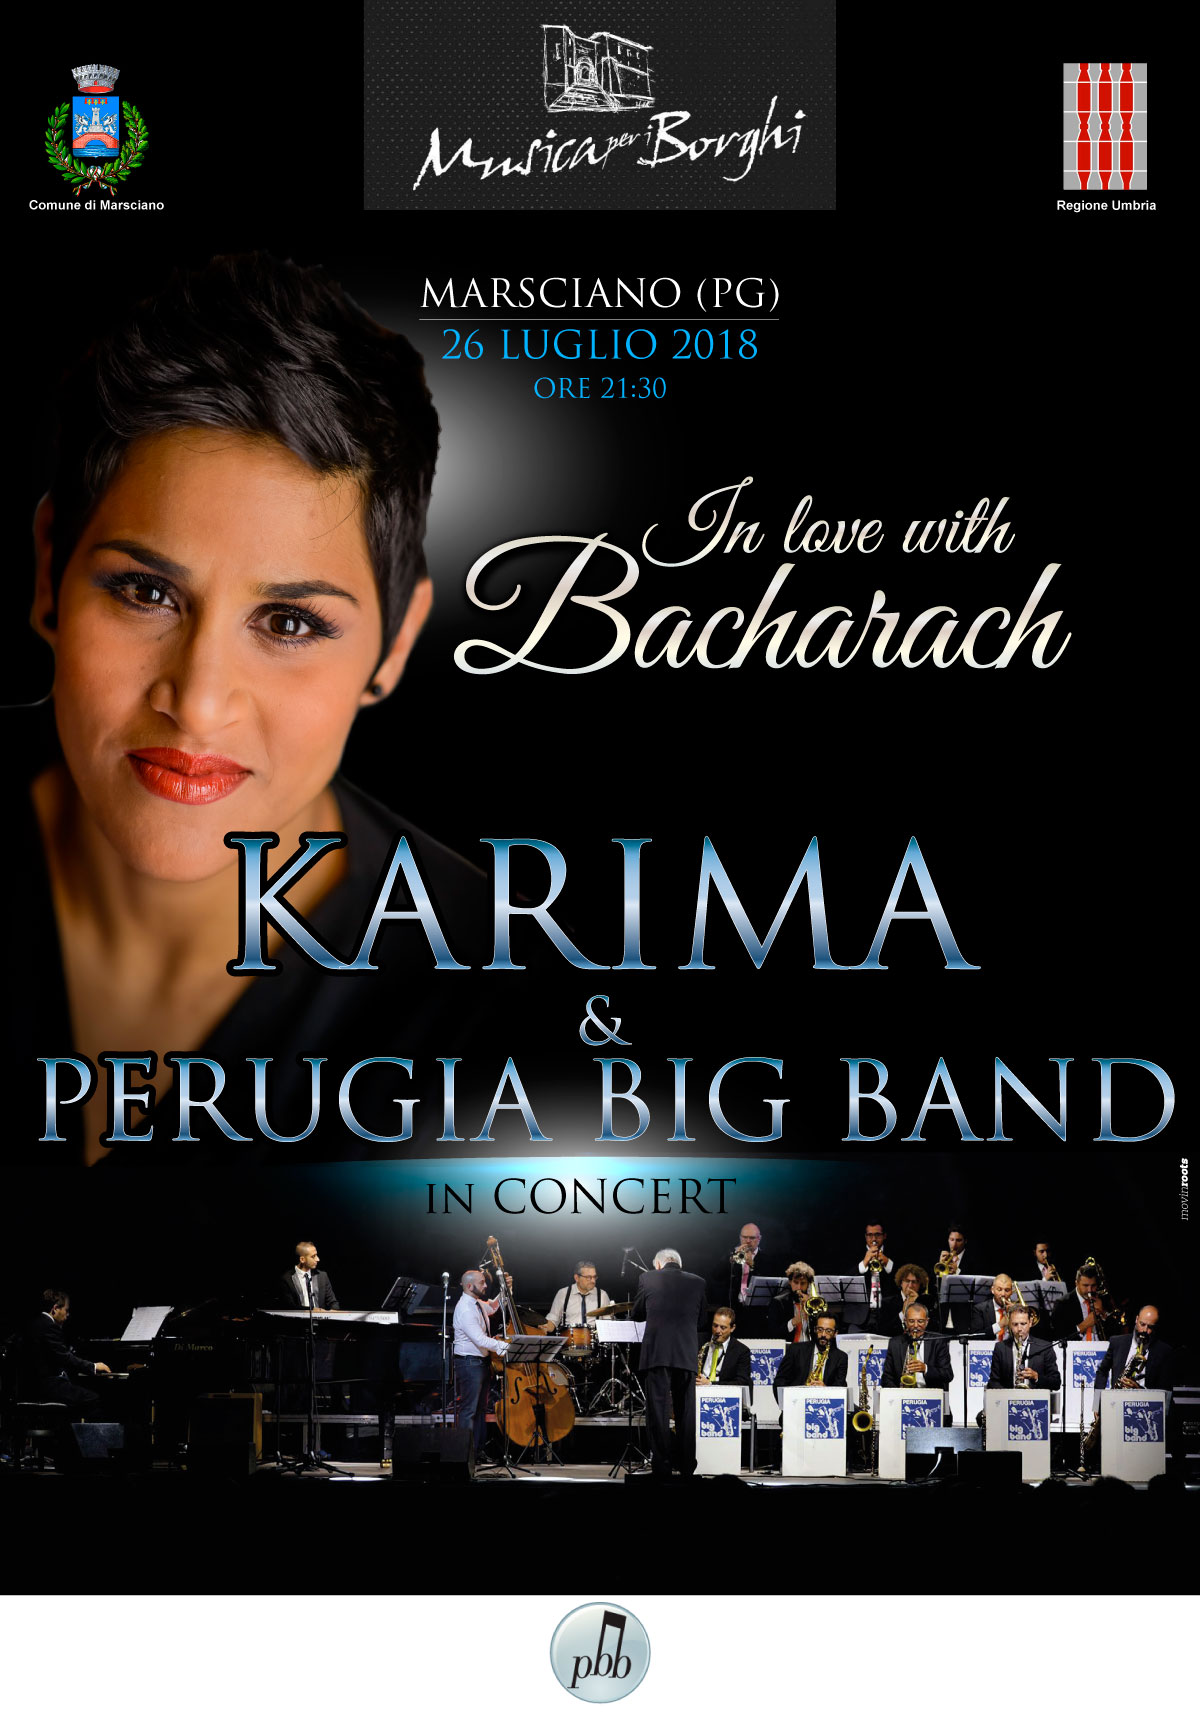 Karima Perugia Big Band Musica per i Borghi MARSCIANO